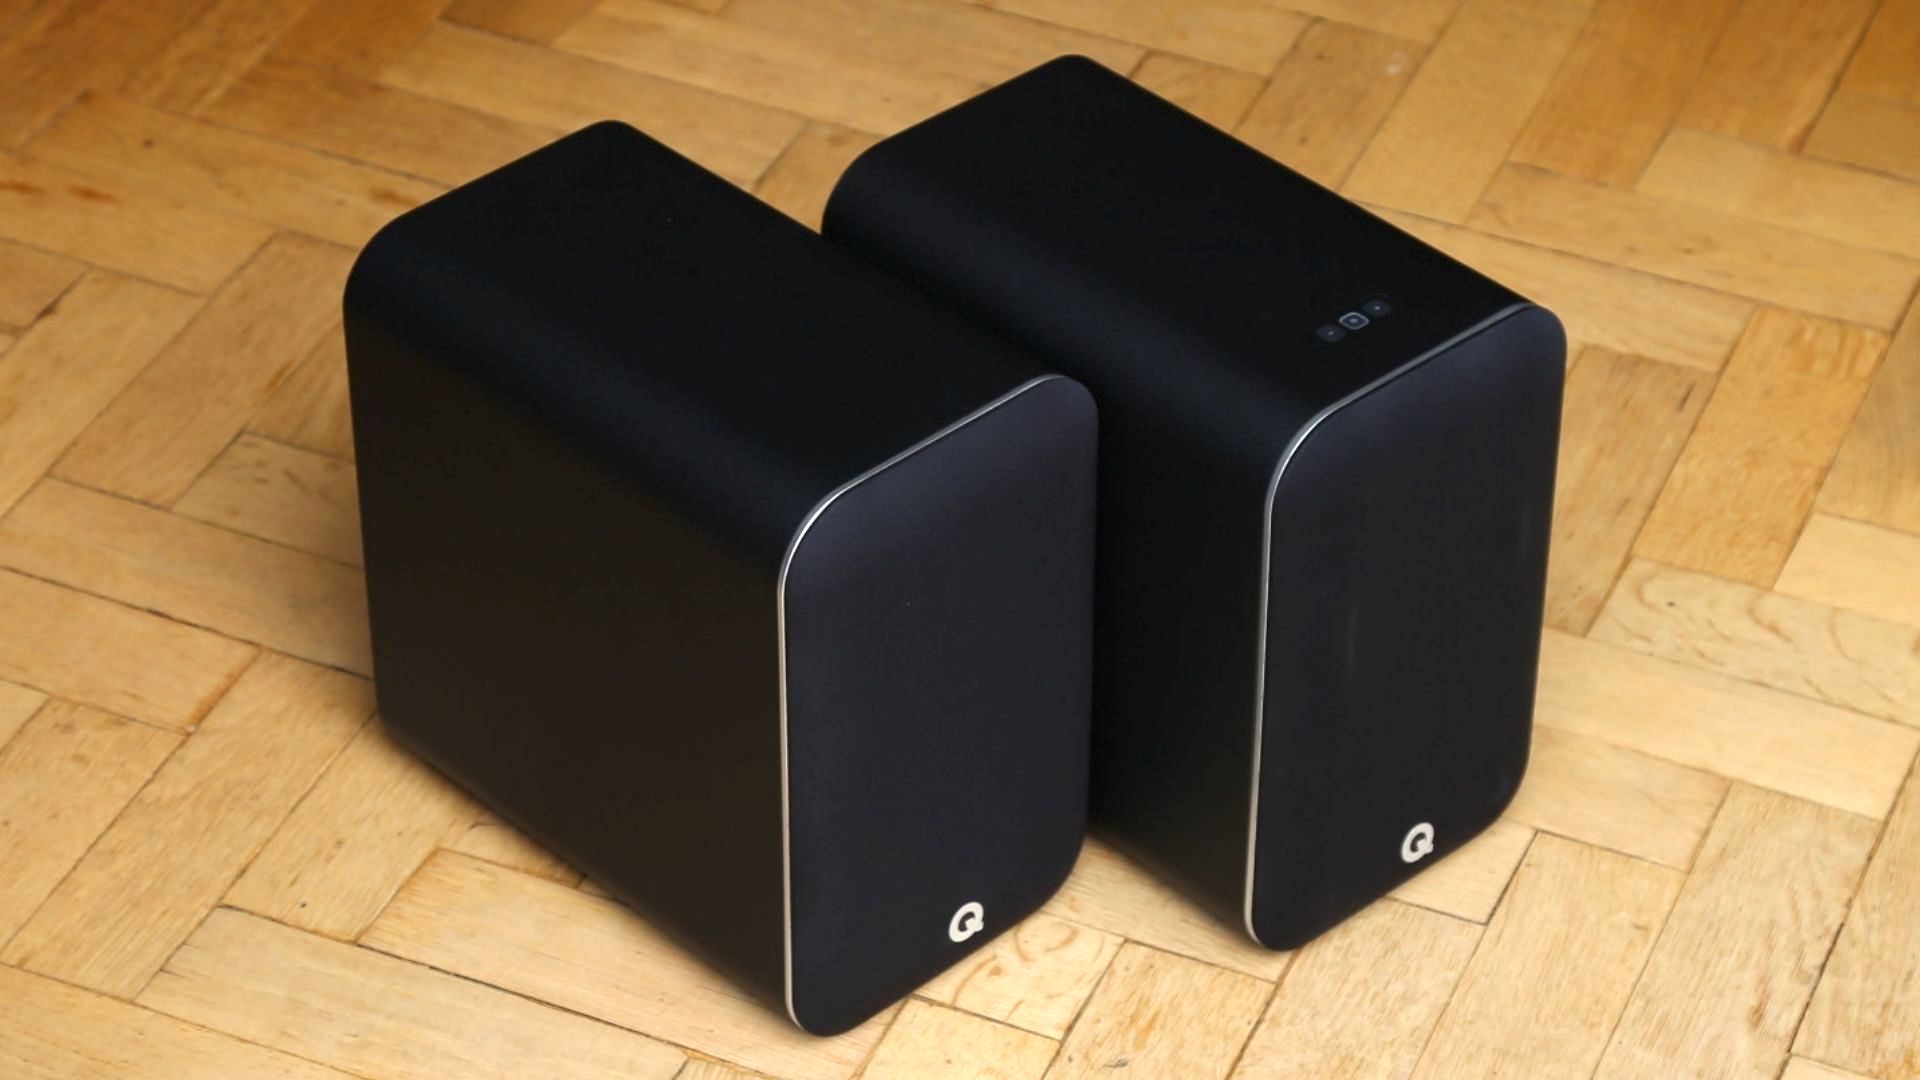 Q Acoustics M20 HD Review: Big Sound, Small Money